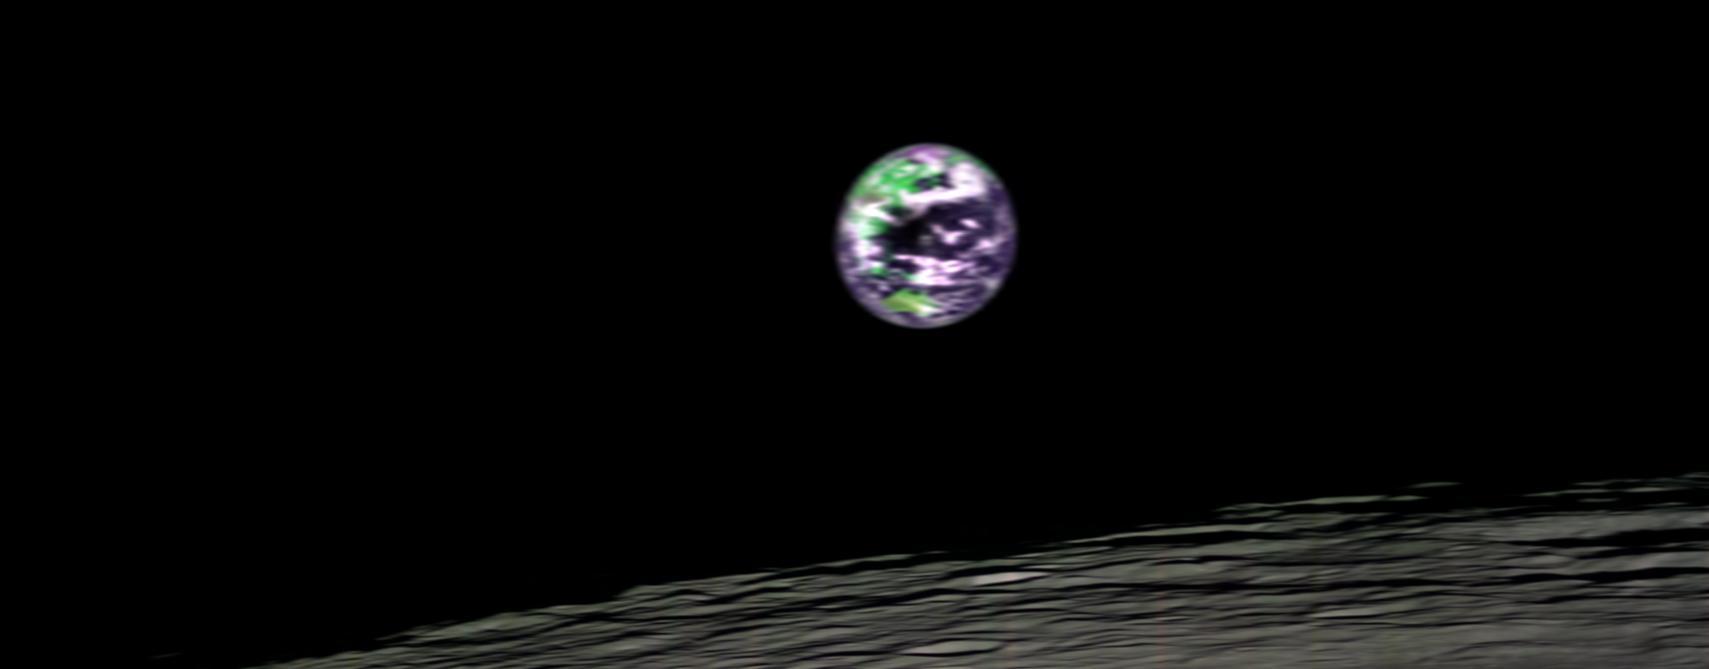 False-color composite of Earth